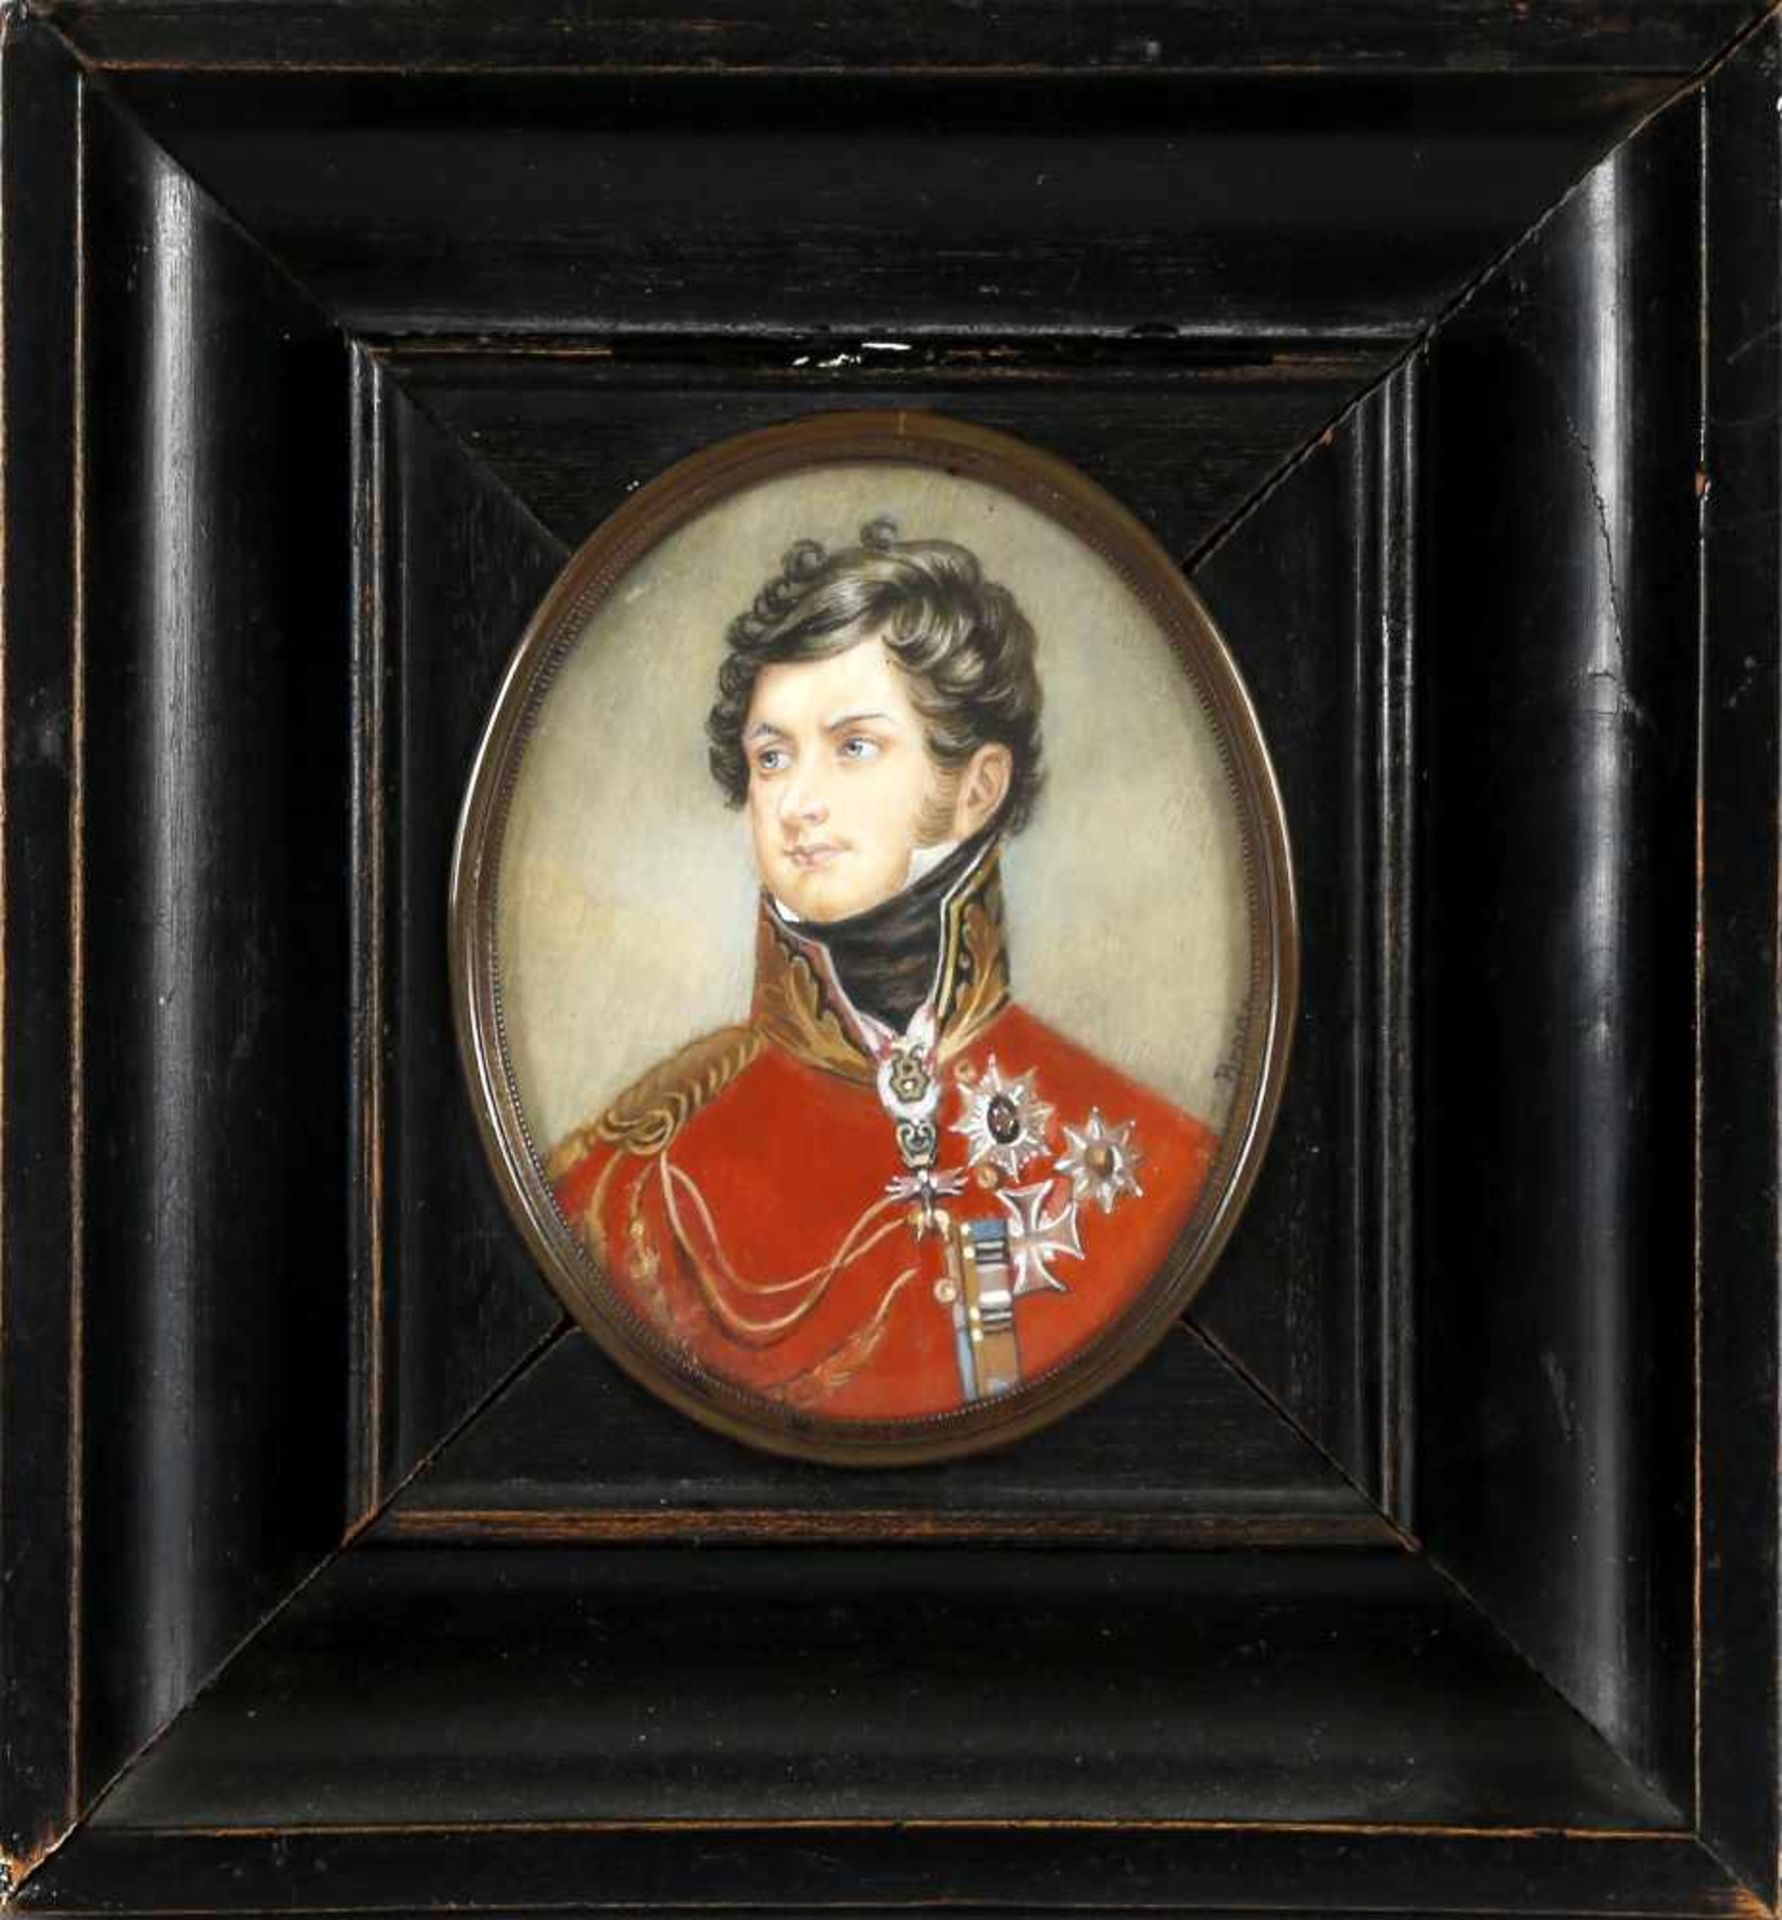 König Georg IV von England (1762-1830)